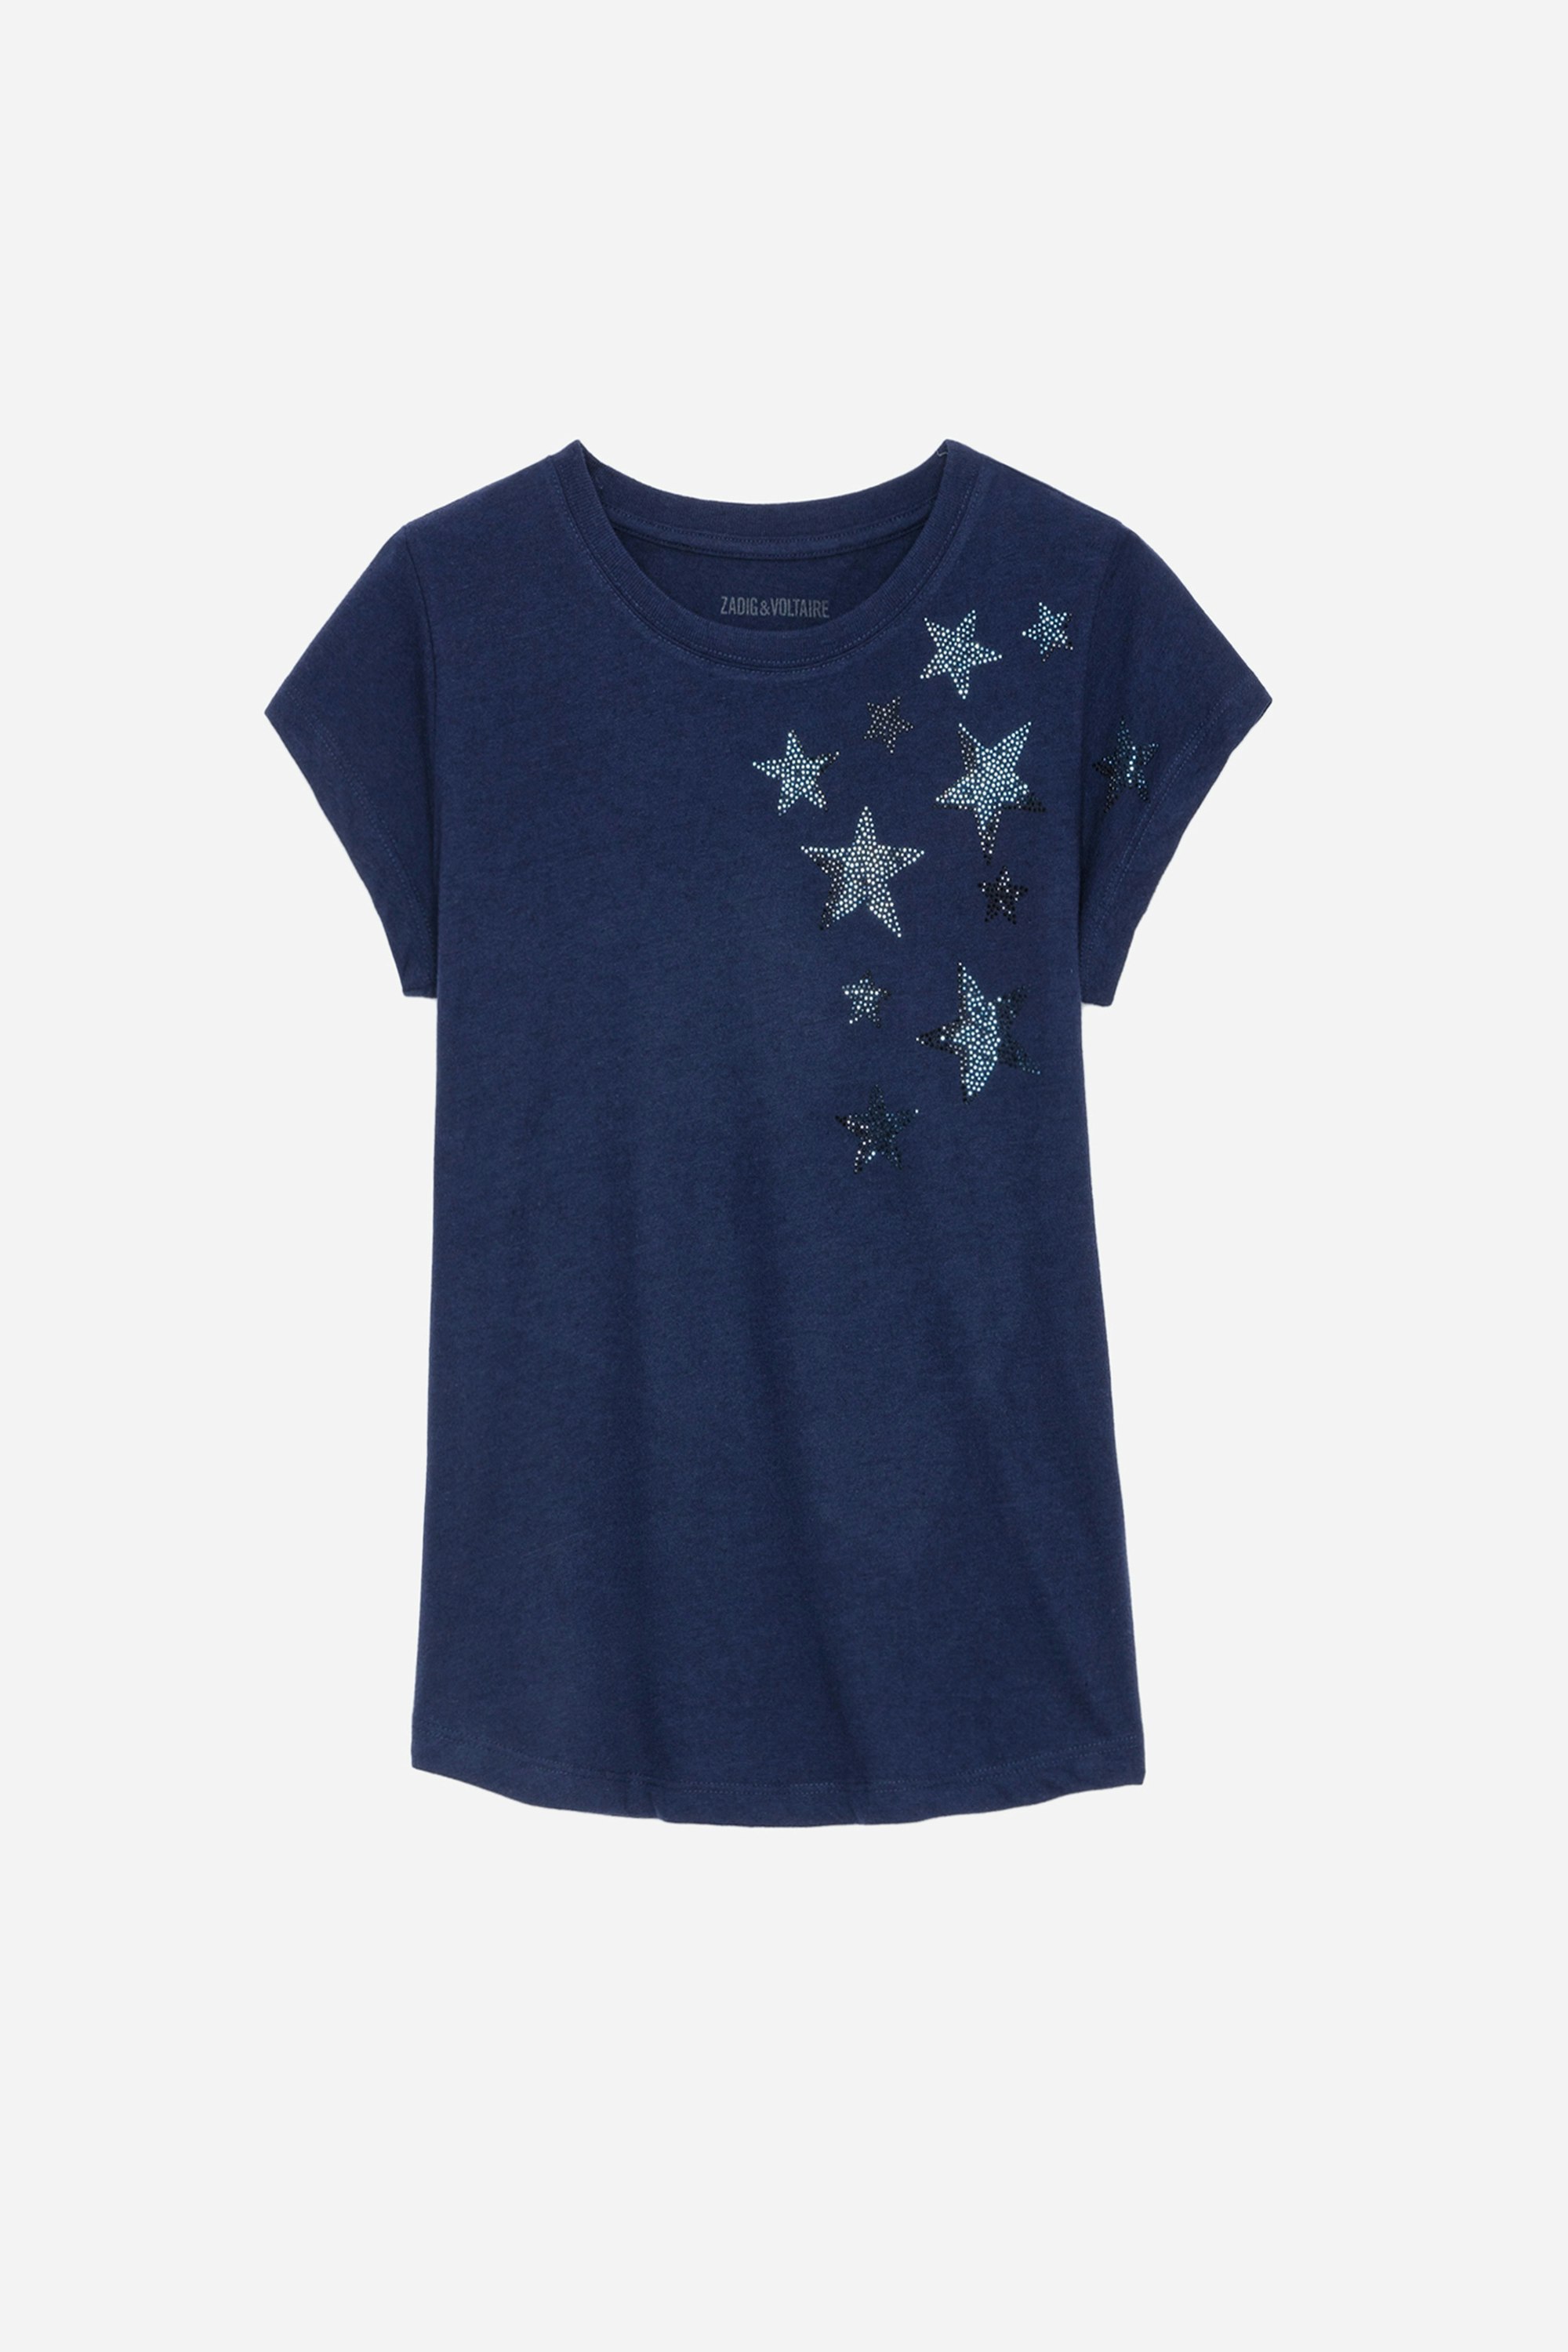 Skinny Stars Diamanté T-Shirt - Women's navy blue T-shirt embellished with diamanté stars.